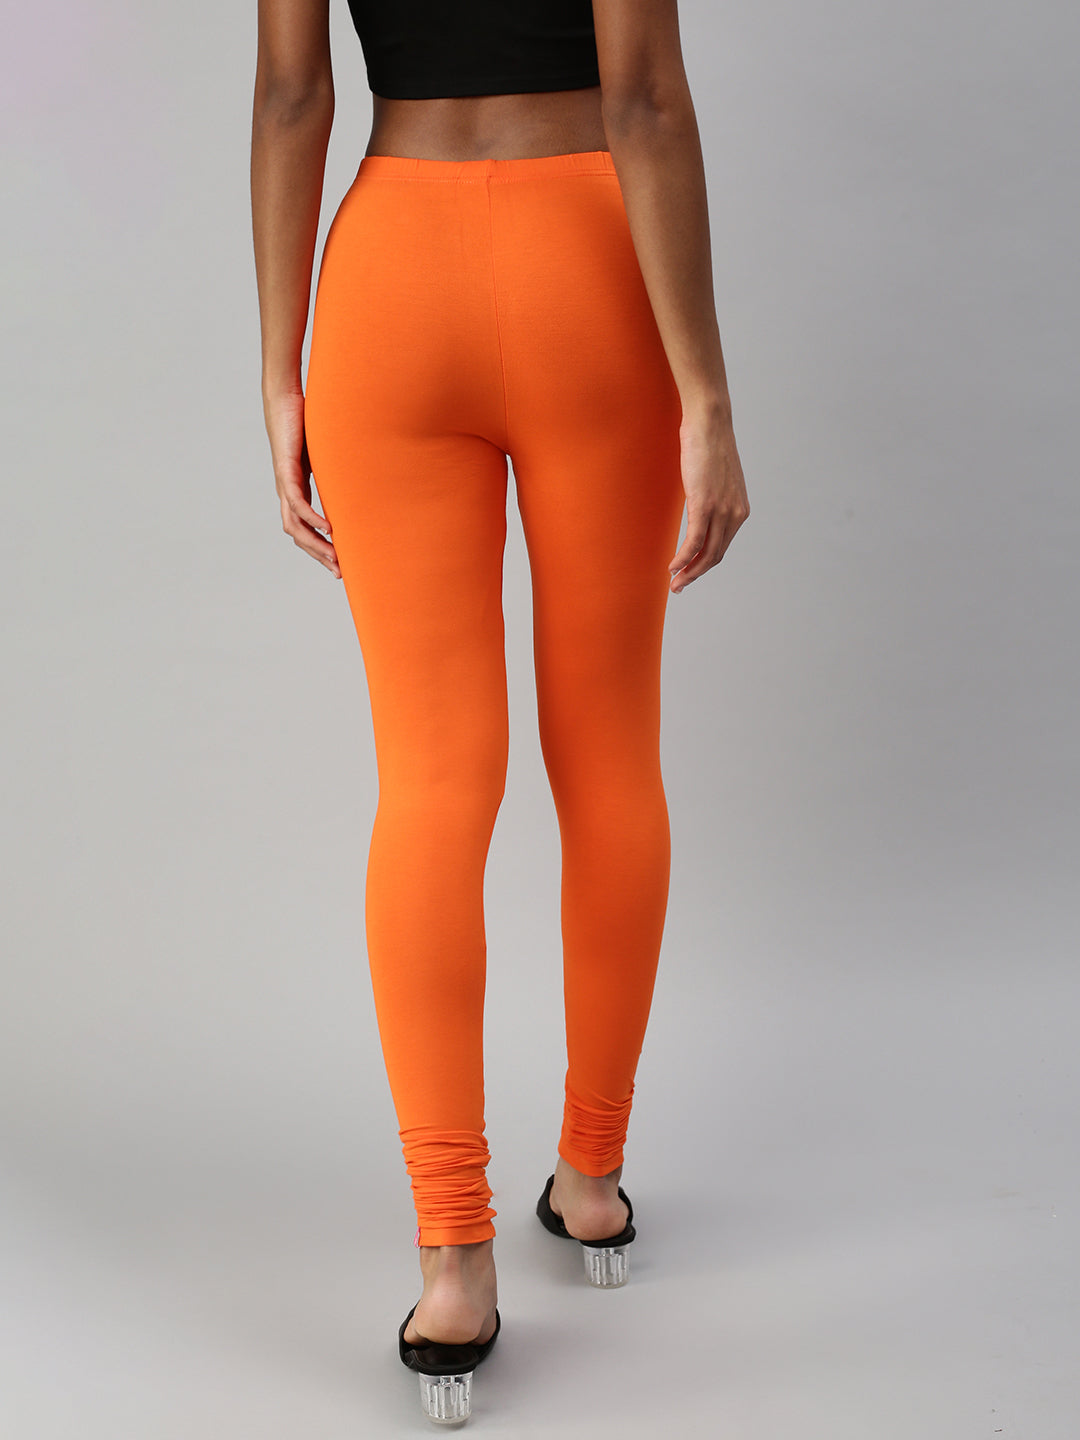 Lularoe TC / Tall & Curvy / Leggings Bright Vibrant Orange Diamond Pattern